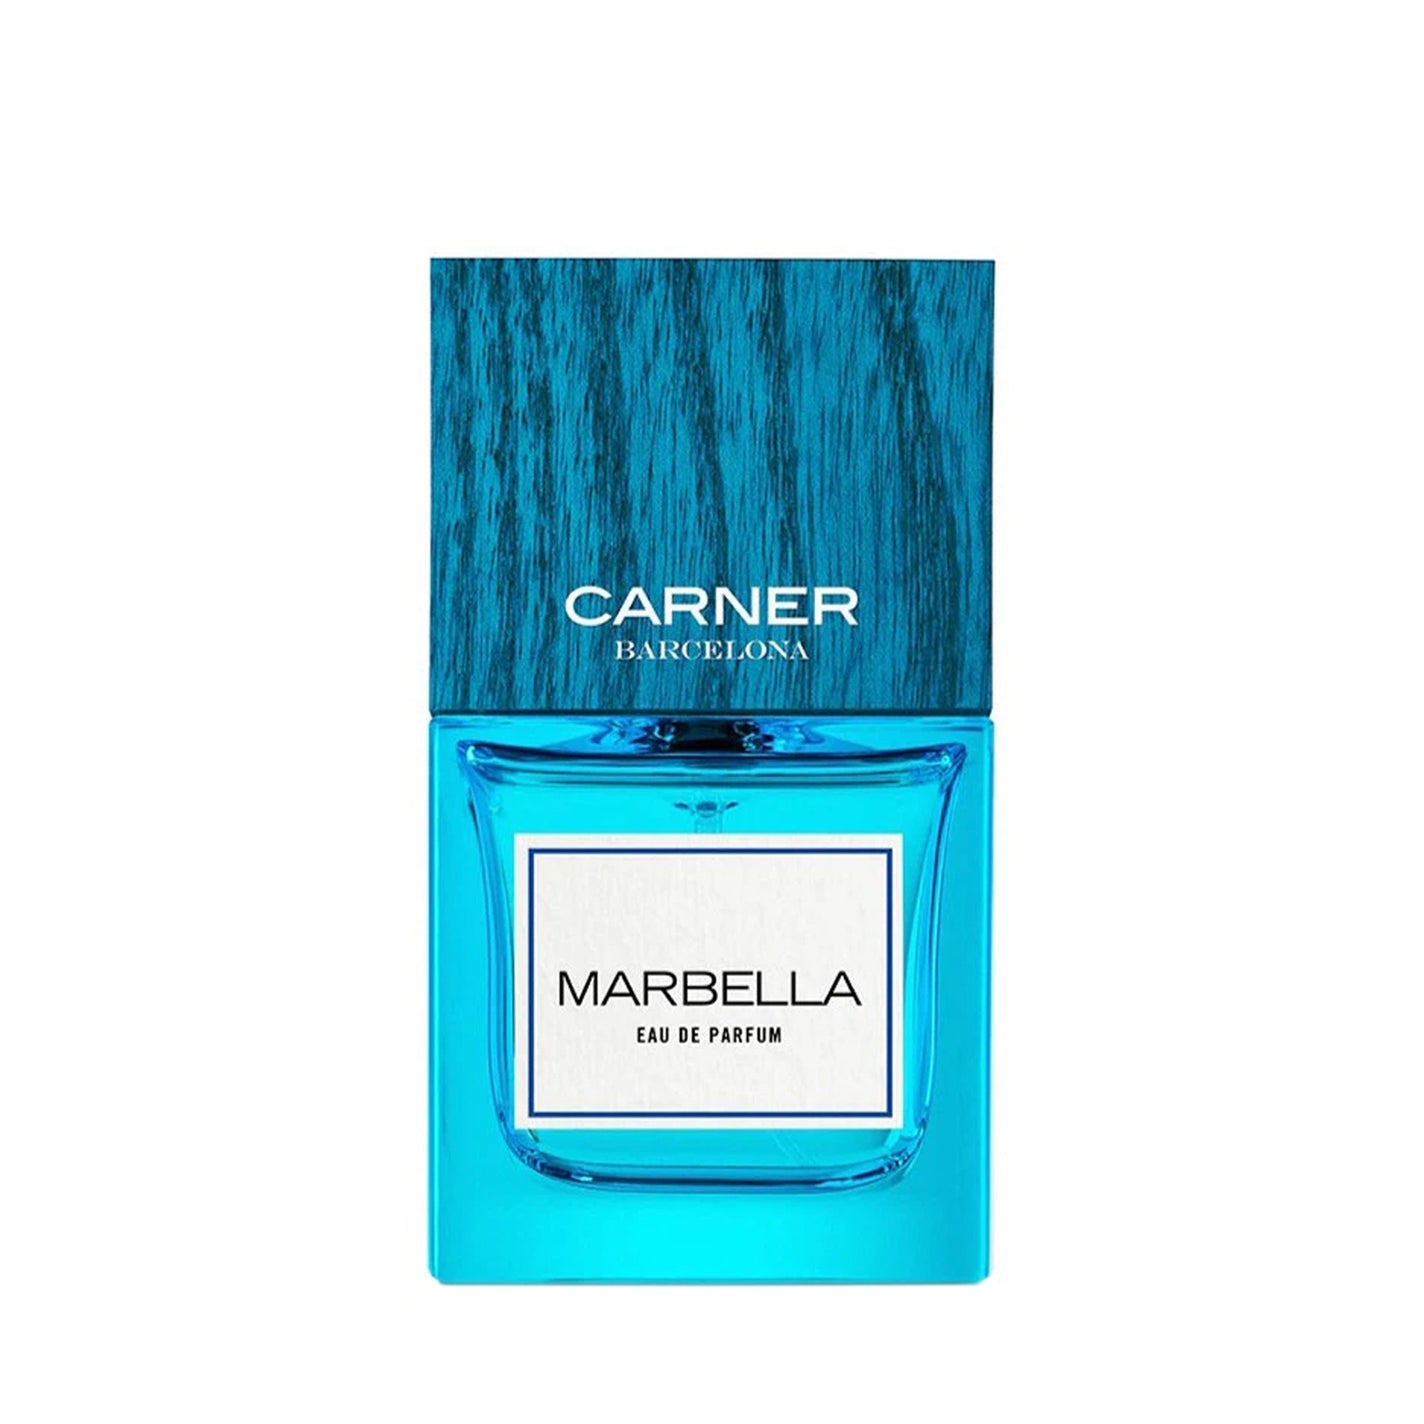 CARNER BARCELONA Marbella Eau de Parfum - 50ml